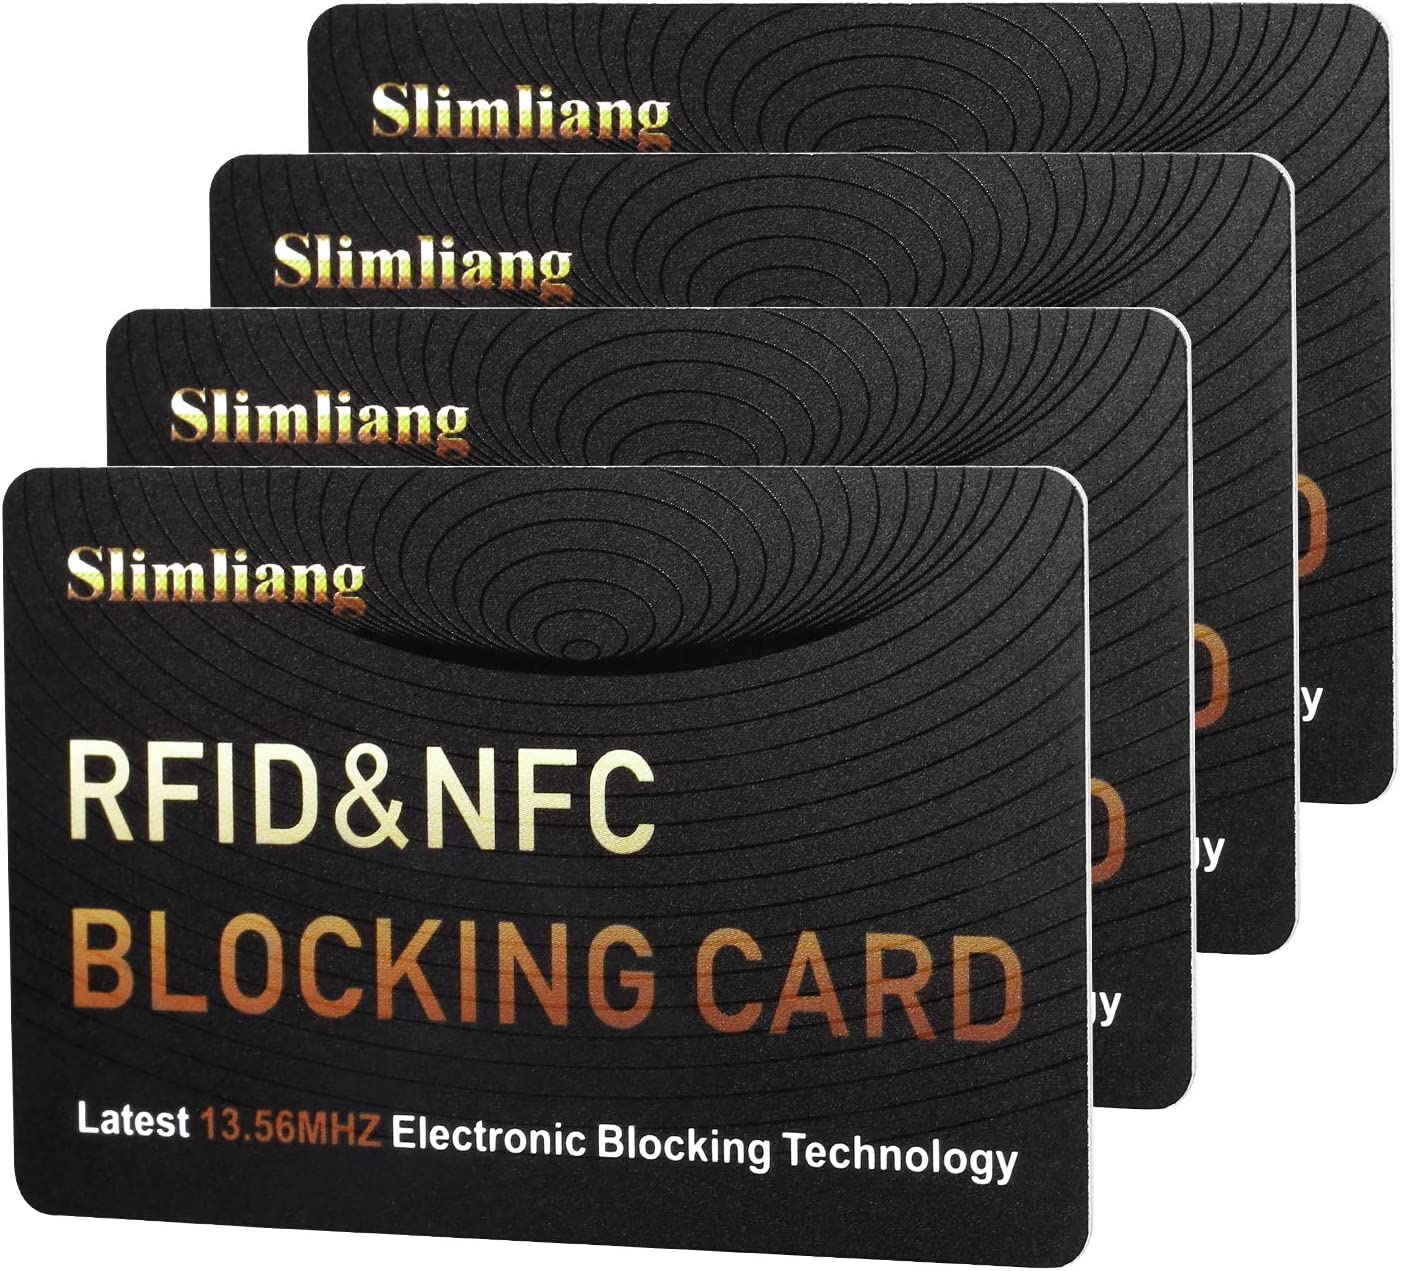 Slimliang RFID & NFC Blocking Card Protector - SpyCamCentral